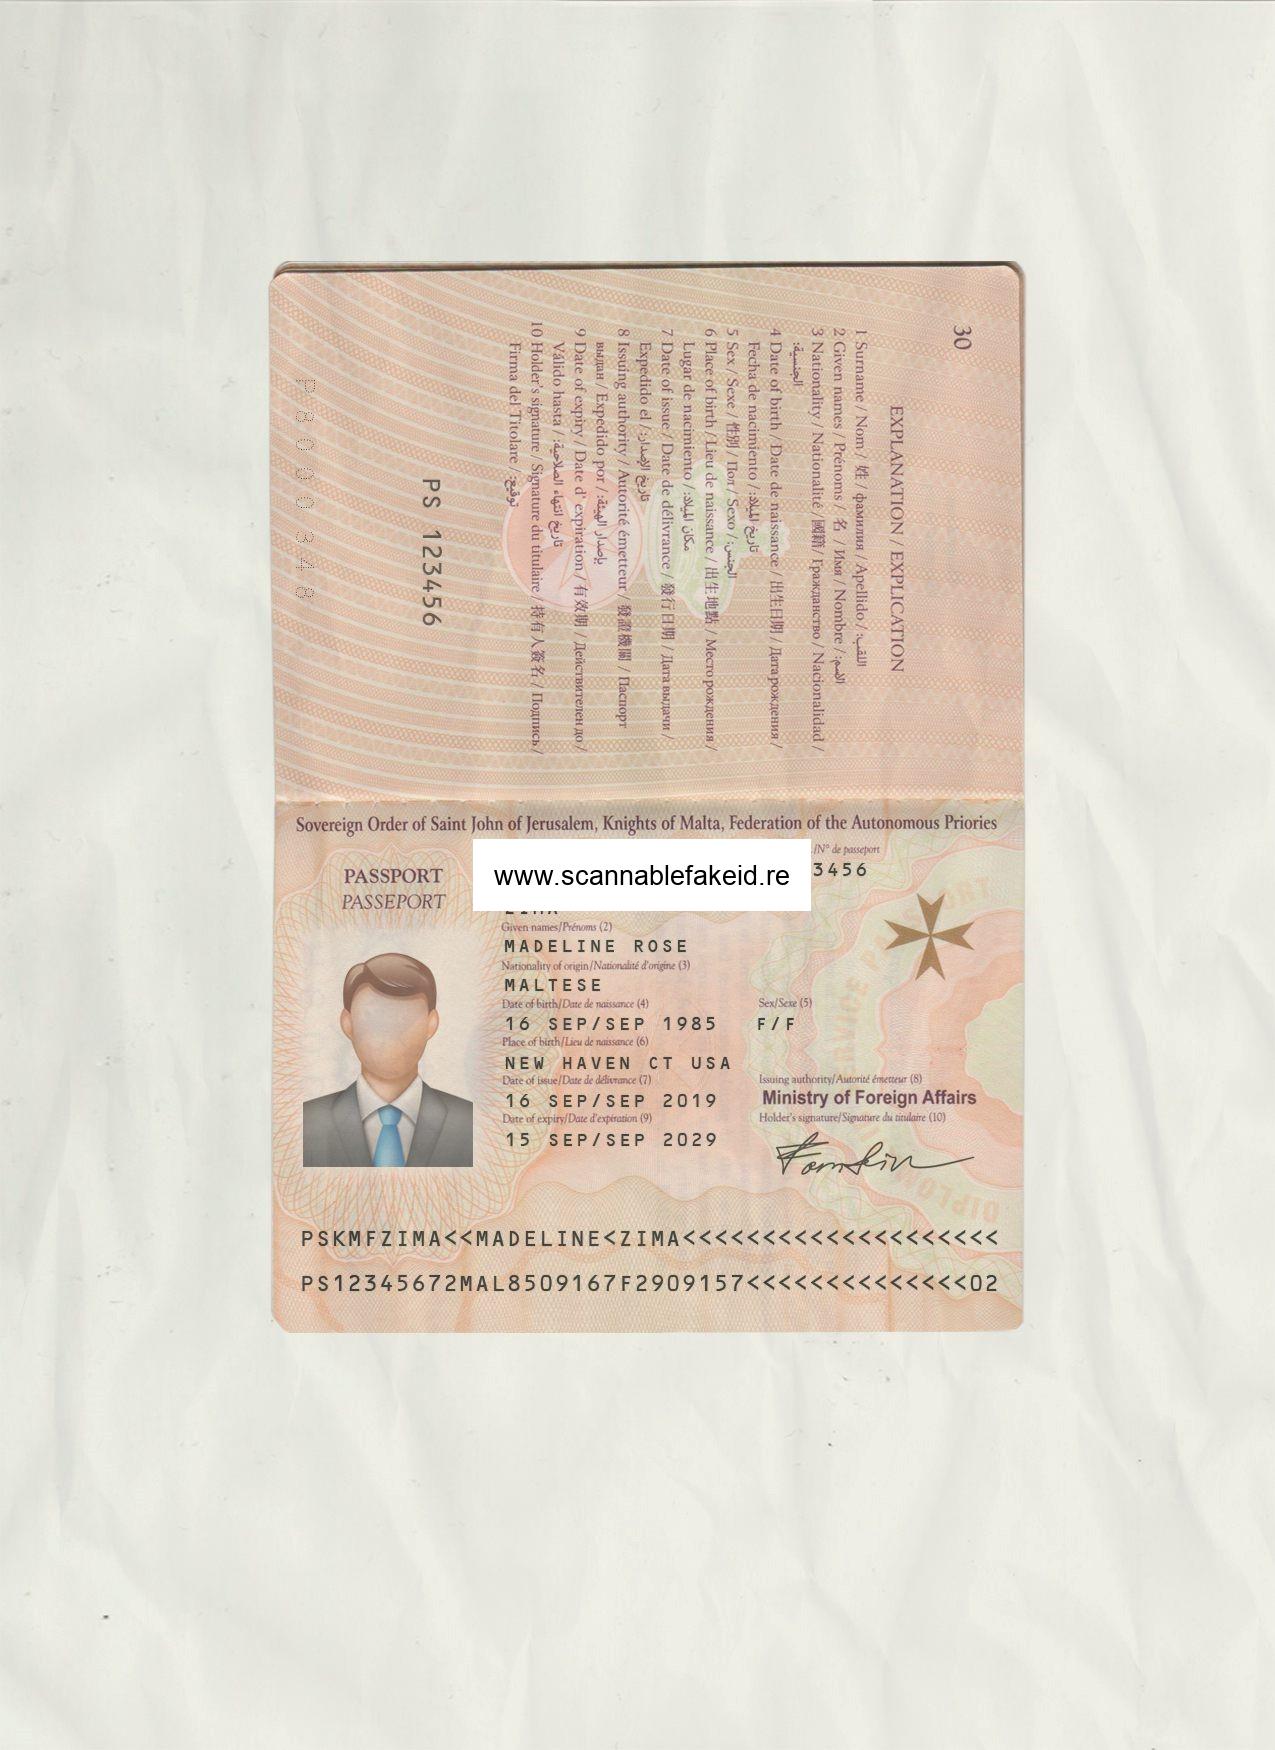 Malta Fake Passport - Best Scannable Fake Id - Buy Fake IDs Online